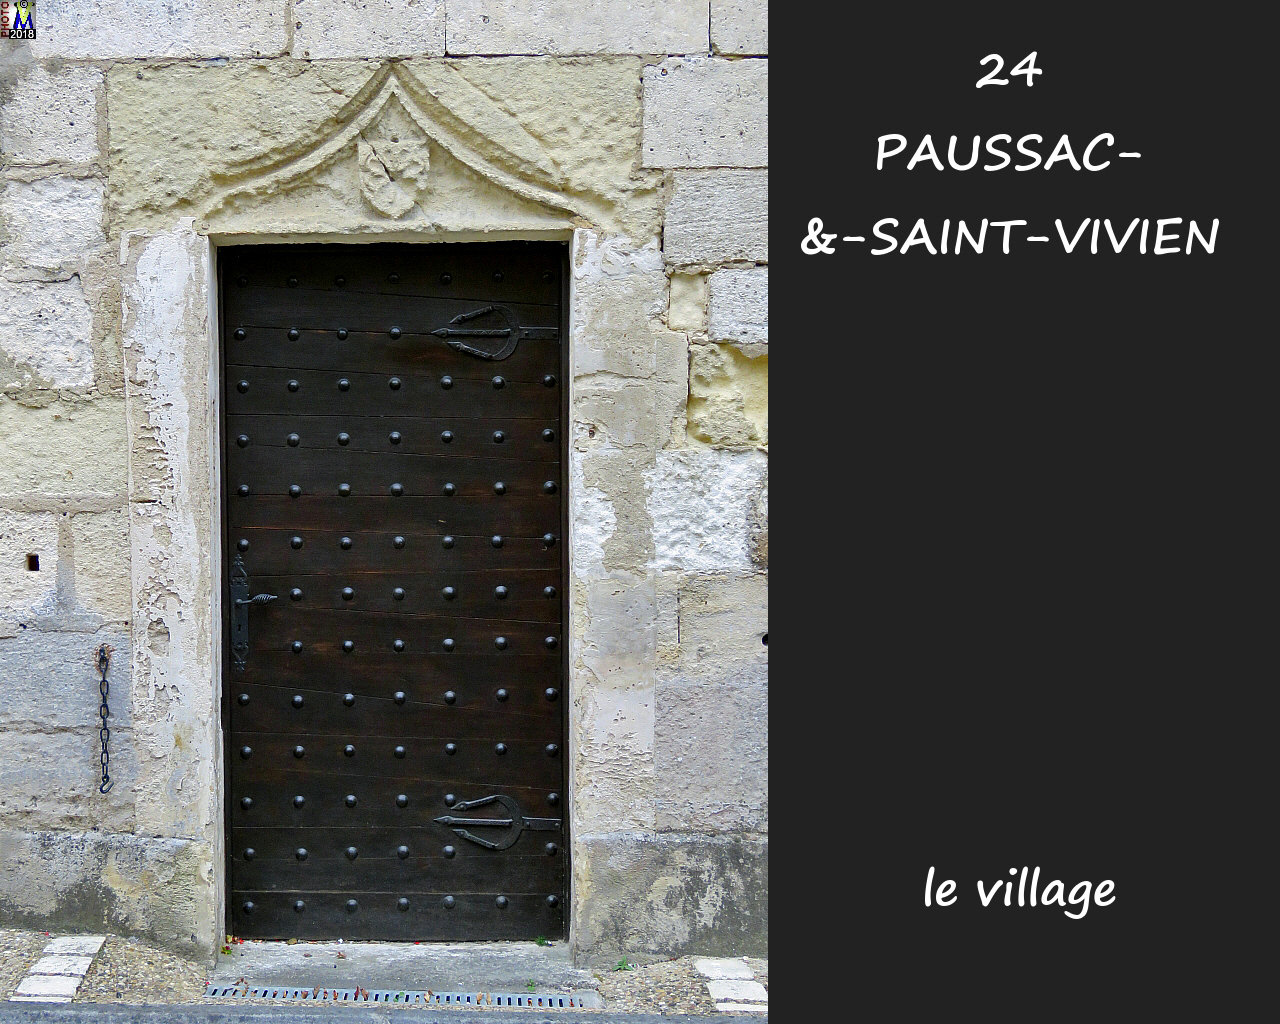 24PAUSSAC-St-VIVIEN_village_1012.jpg